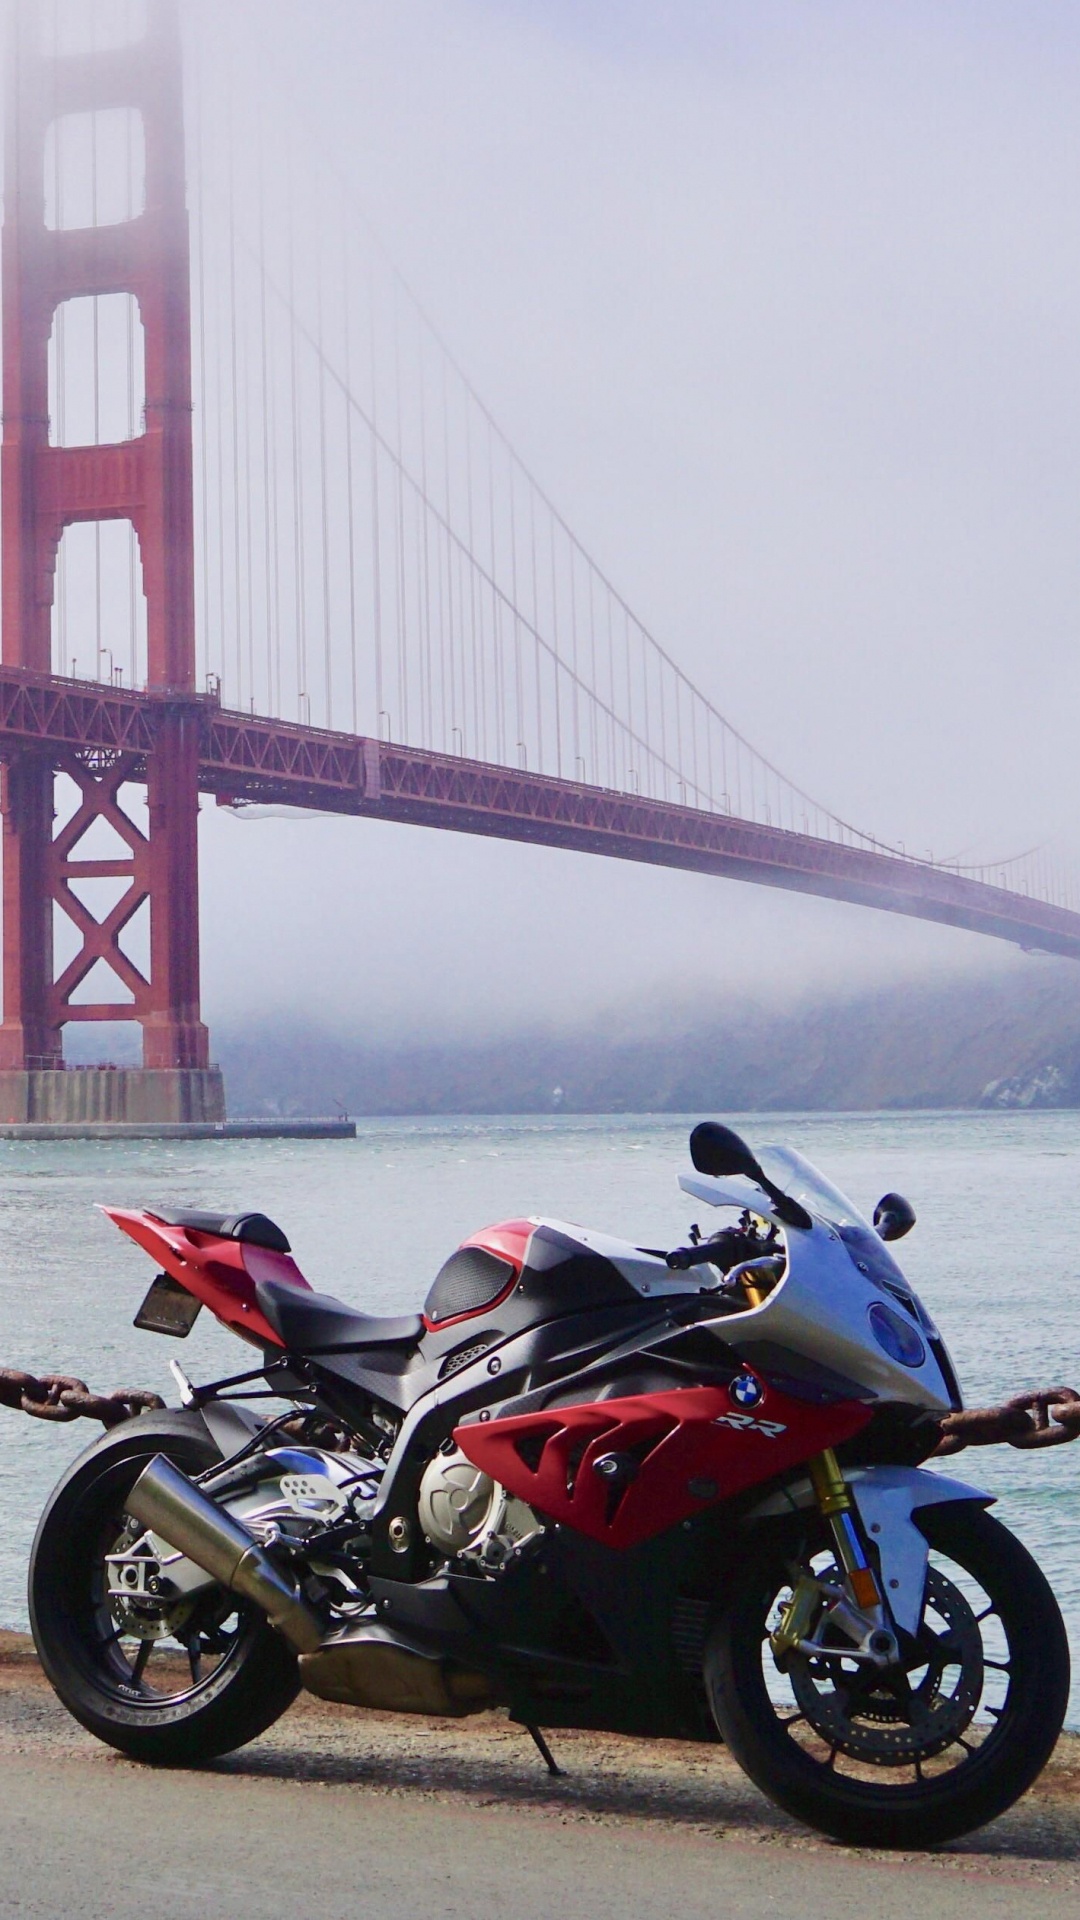 Motocicleta Roja y Negra Cerca Del Puente Golden Gate. Wallpaper in 1080x1920 Resolution